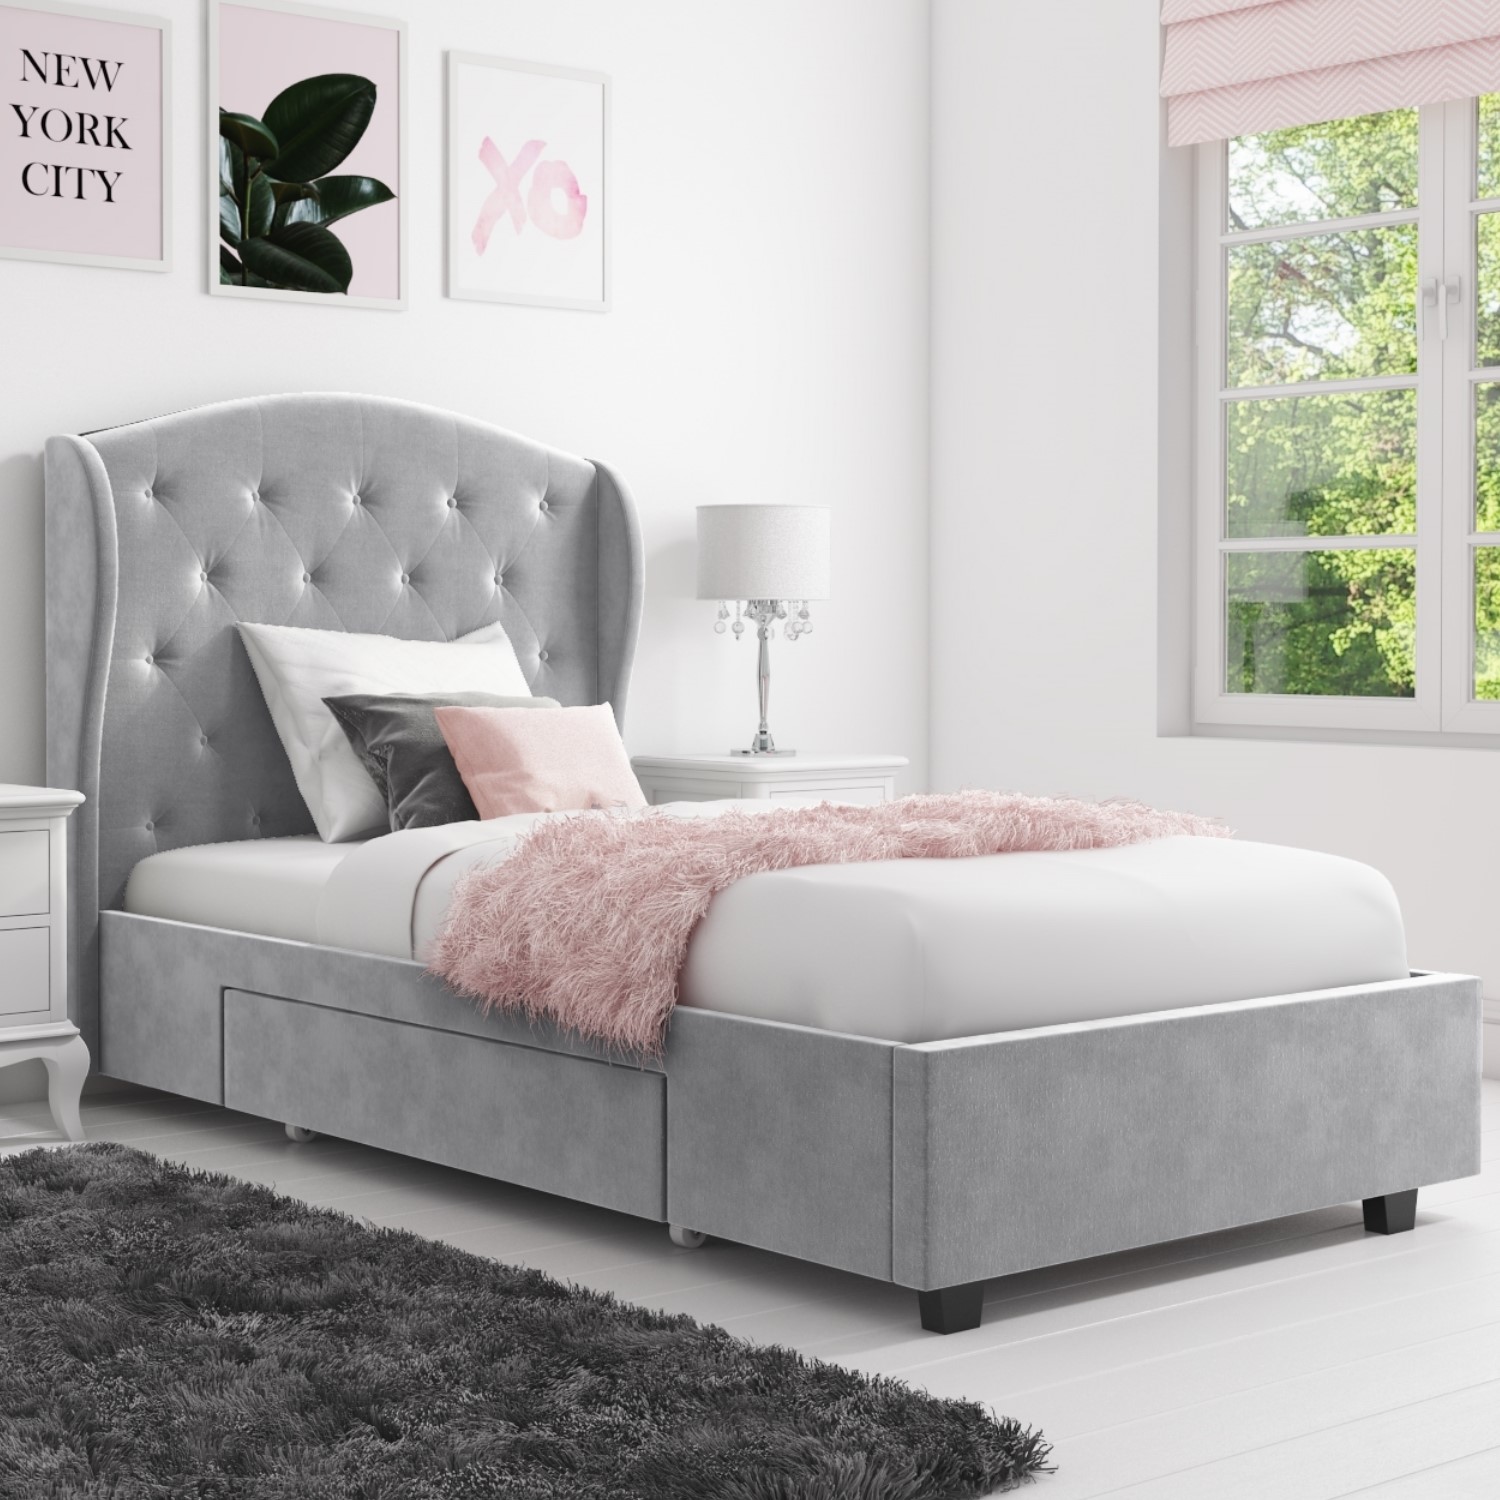 Safina Wing Back Single Bed in Grey Velvet with Underbed Drawer